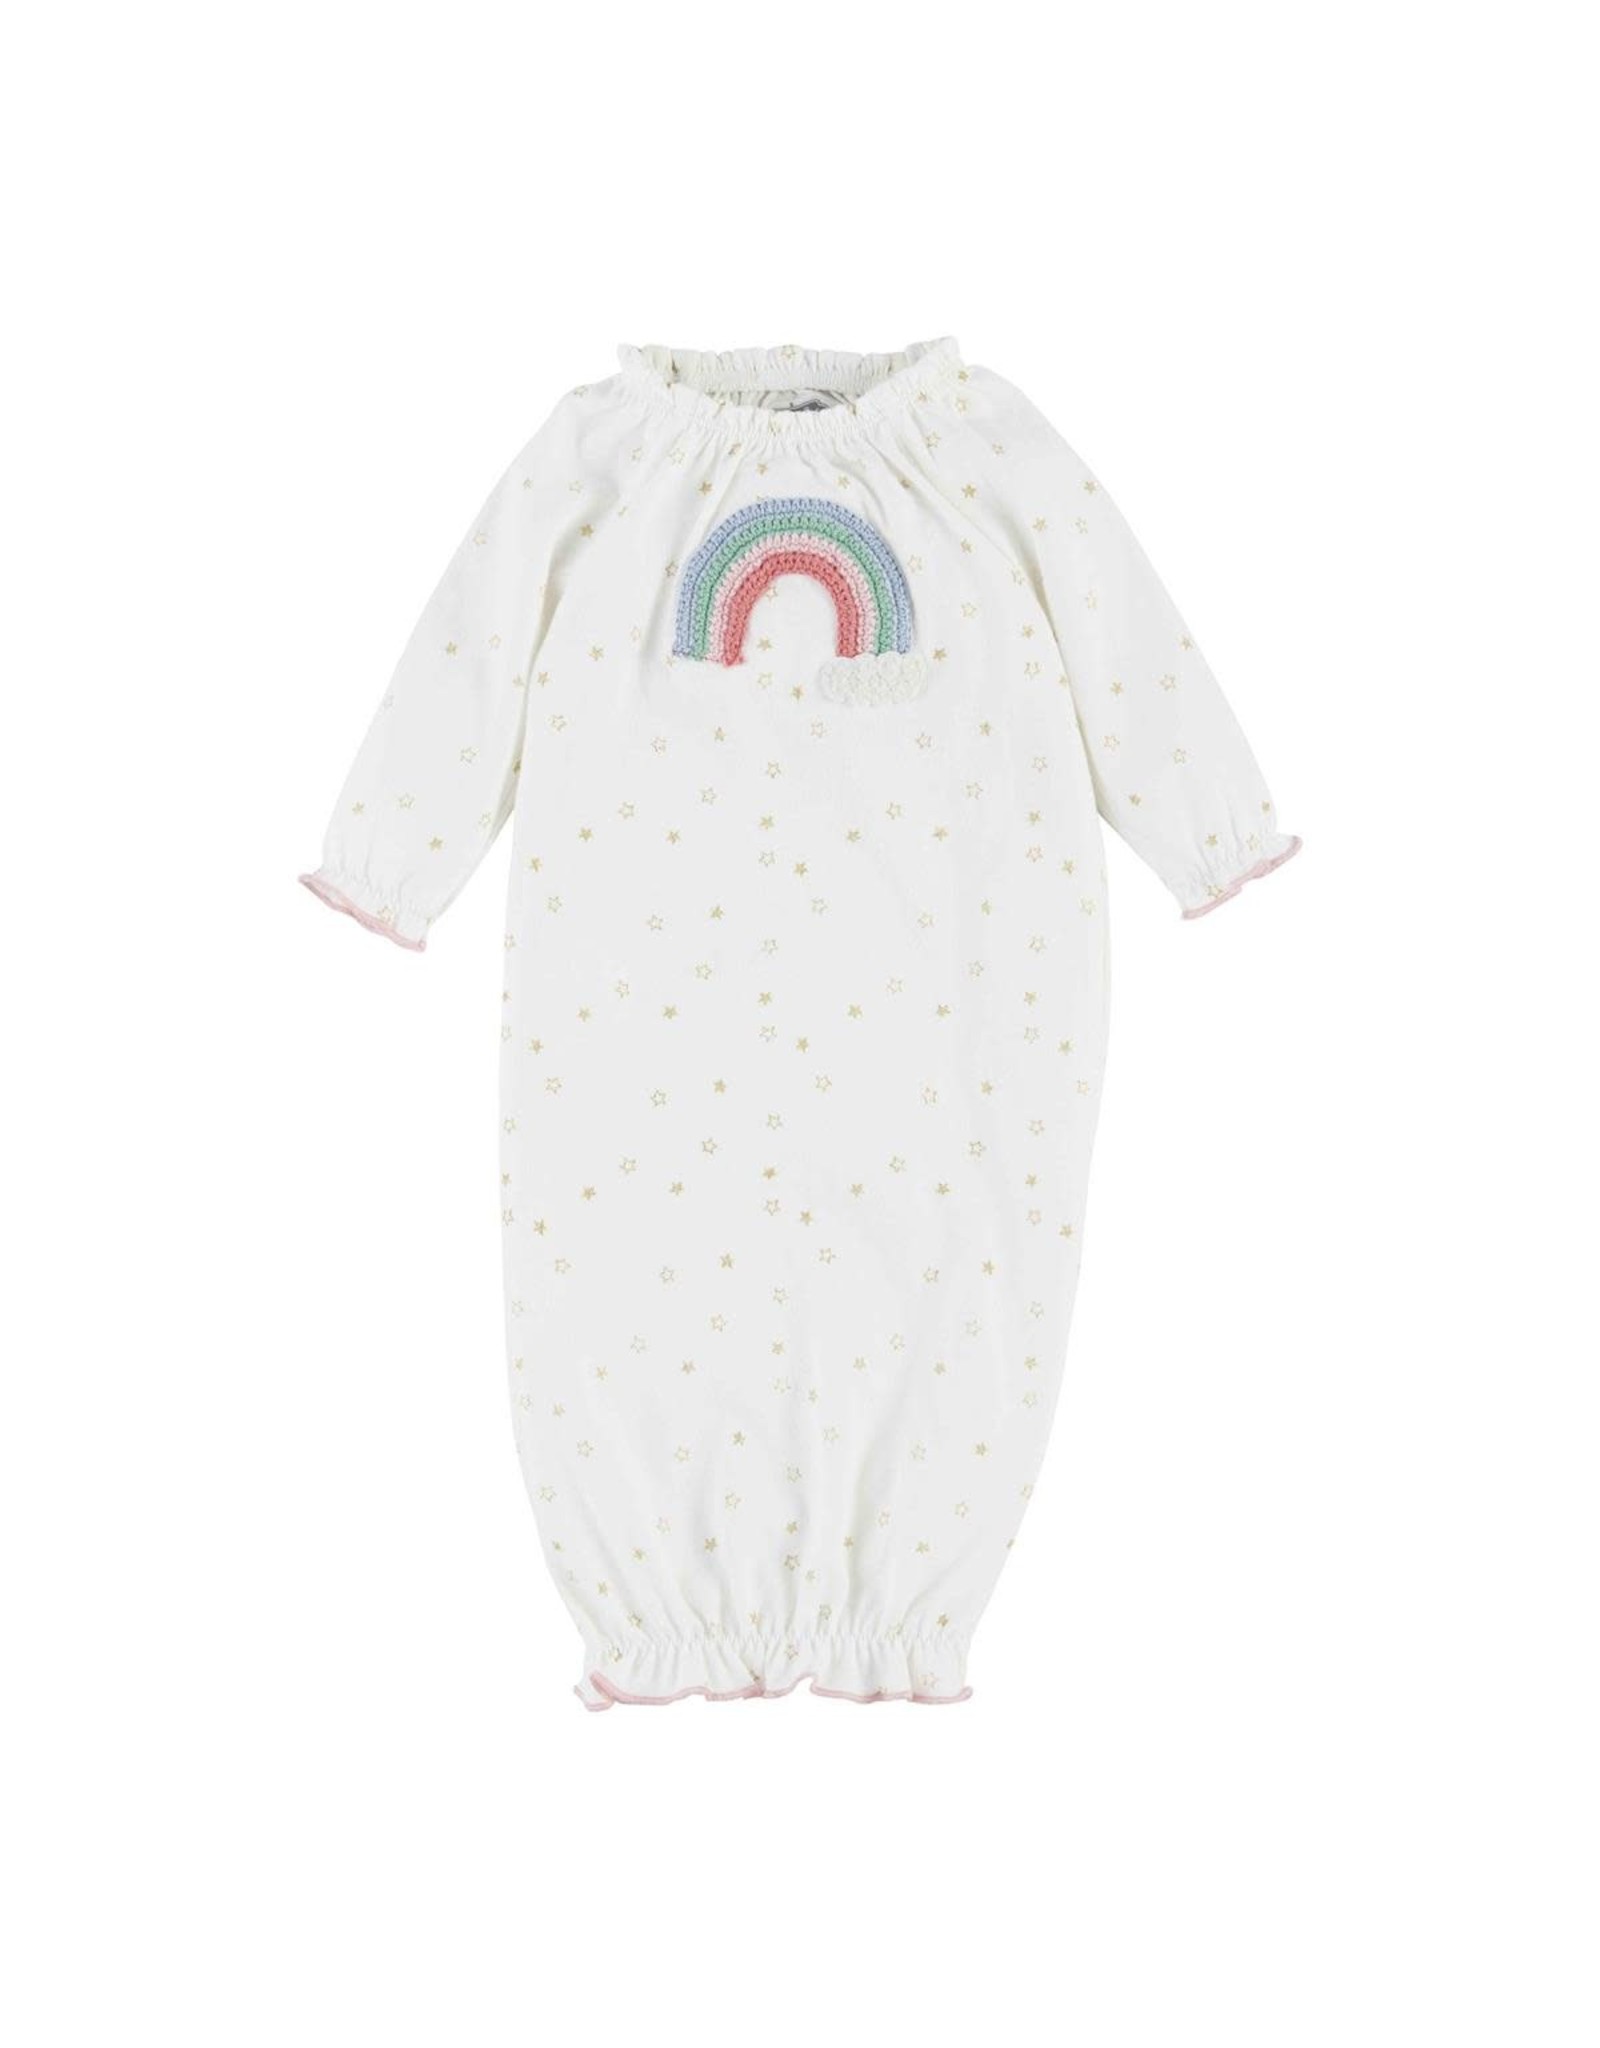 Mud Pie New Born Baby Clothing Rainbow Crochet Sleeper Gown 0-3 Months